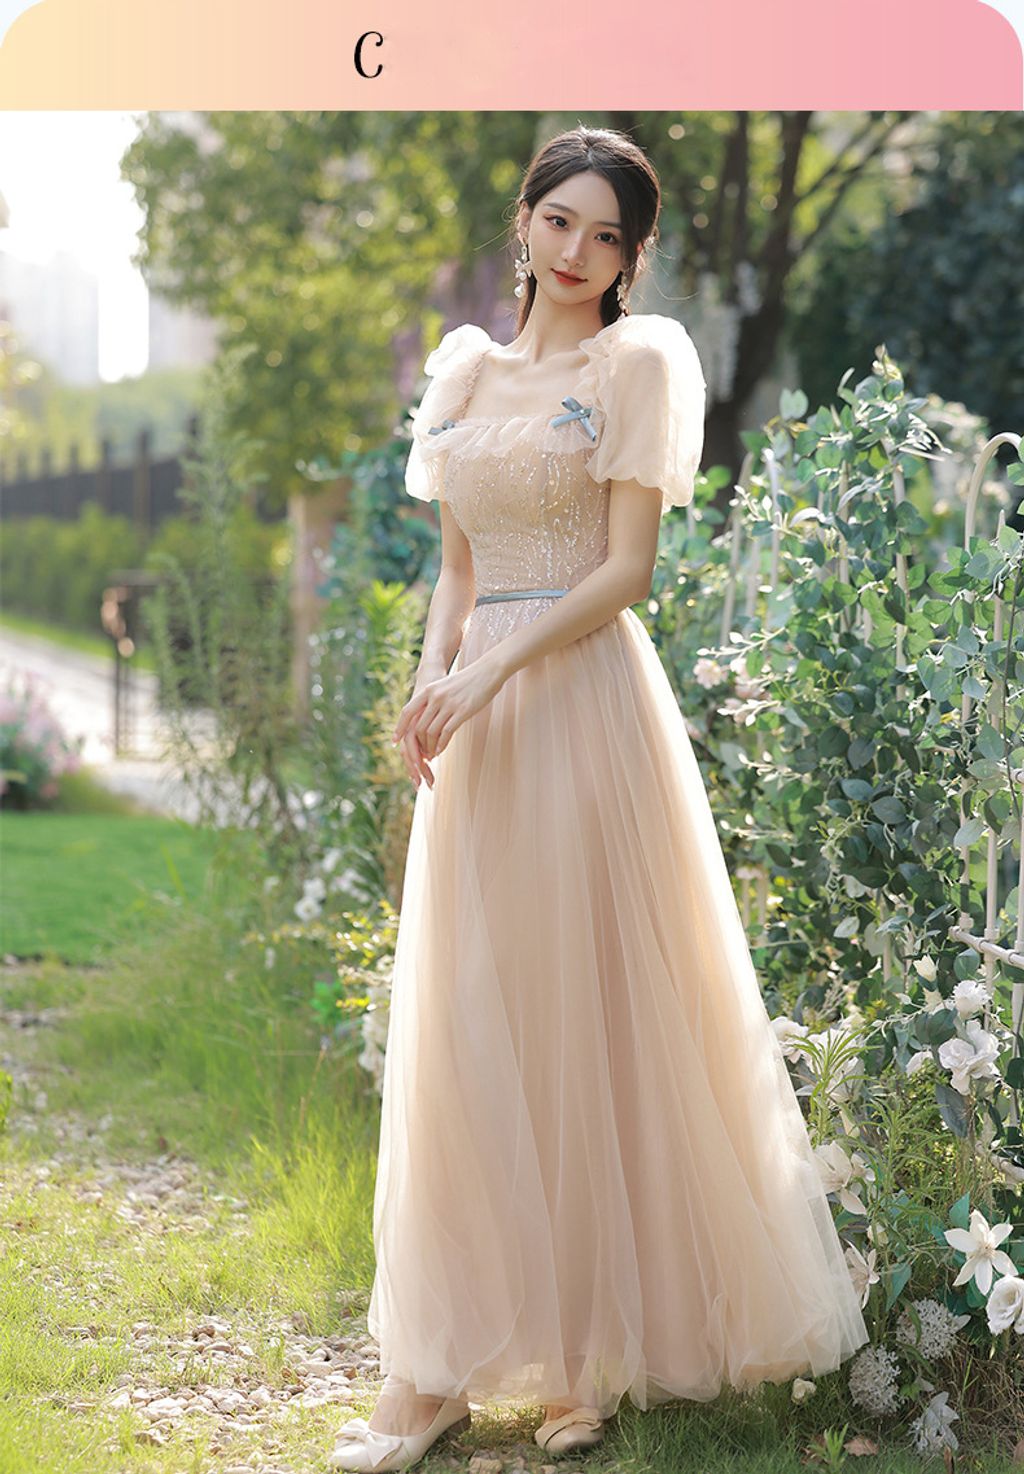 Coffee Color Bridesmaid Dress-Type C